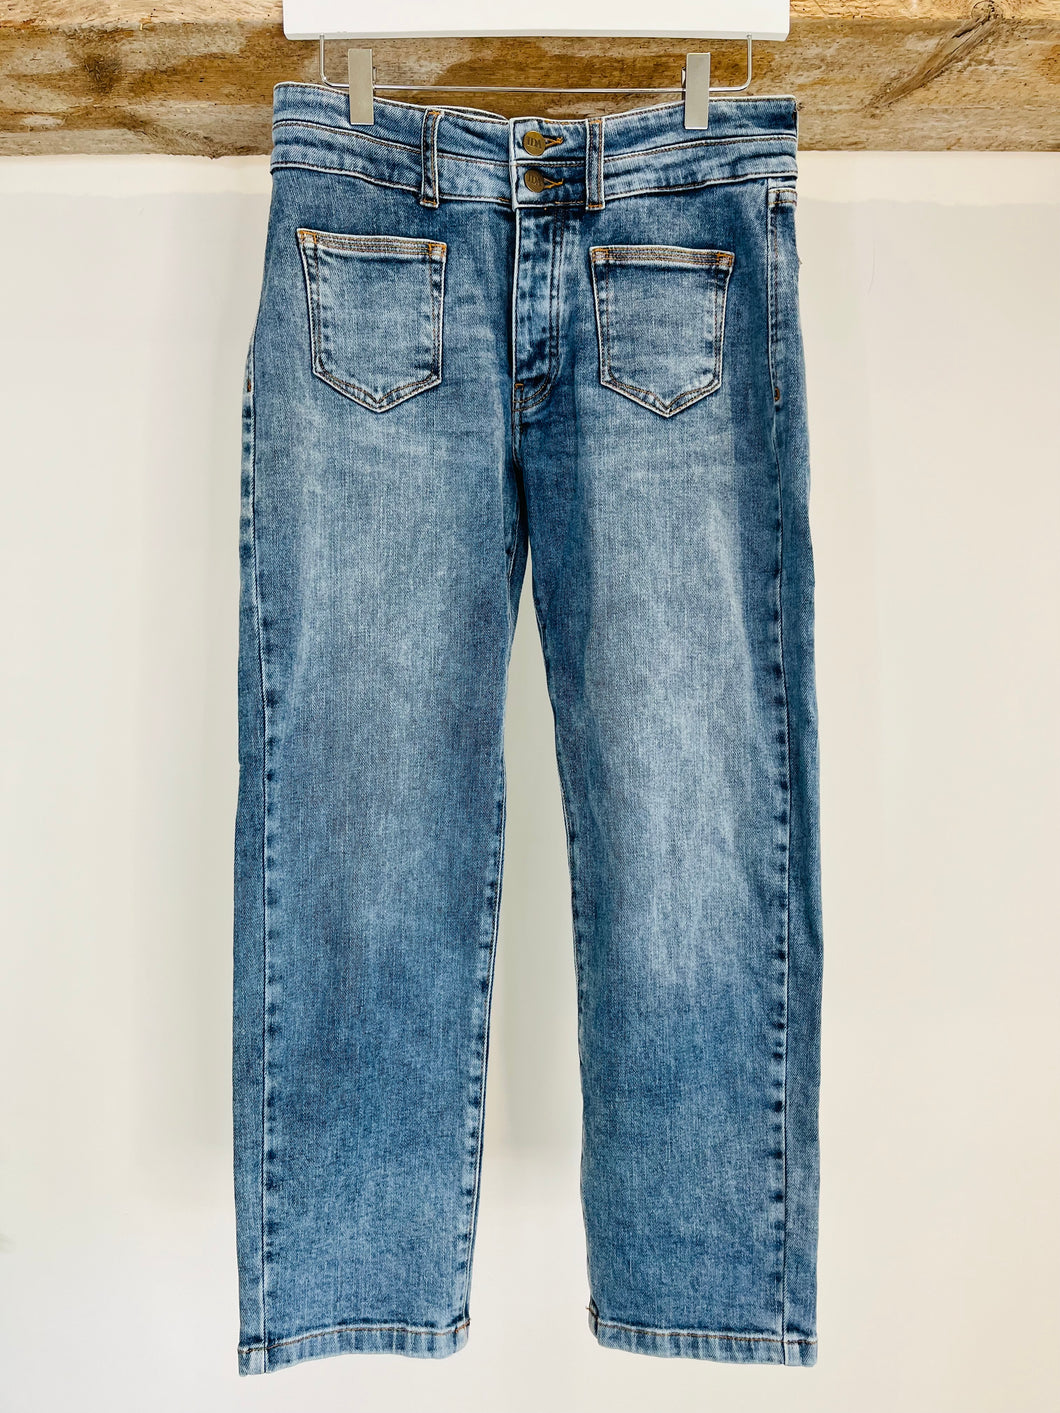 Patch Pocket Cropped Jeans - Size 28